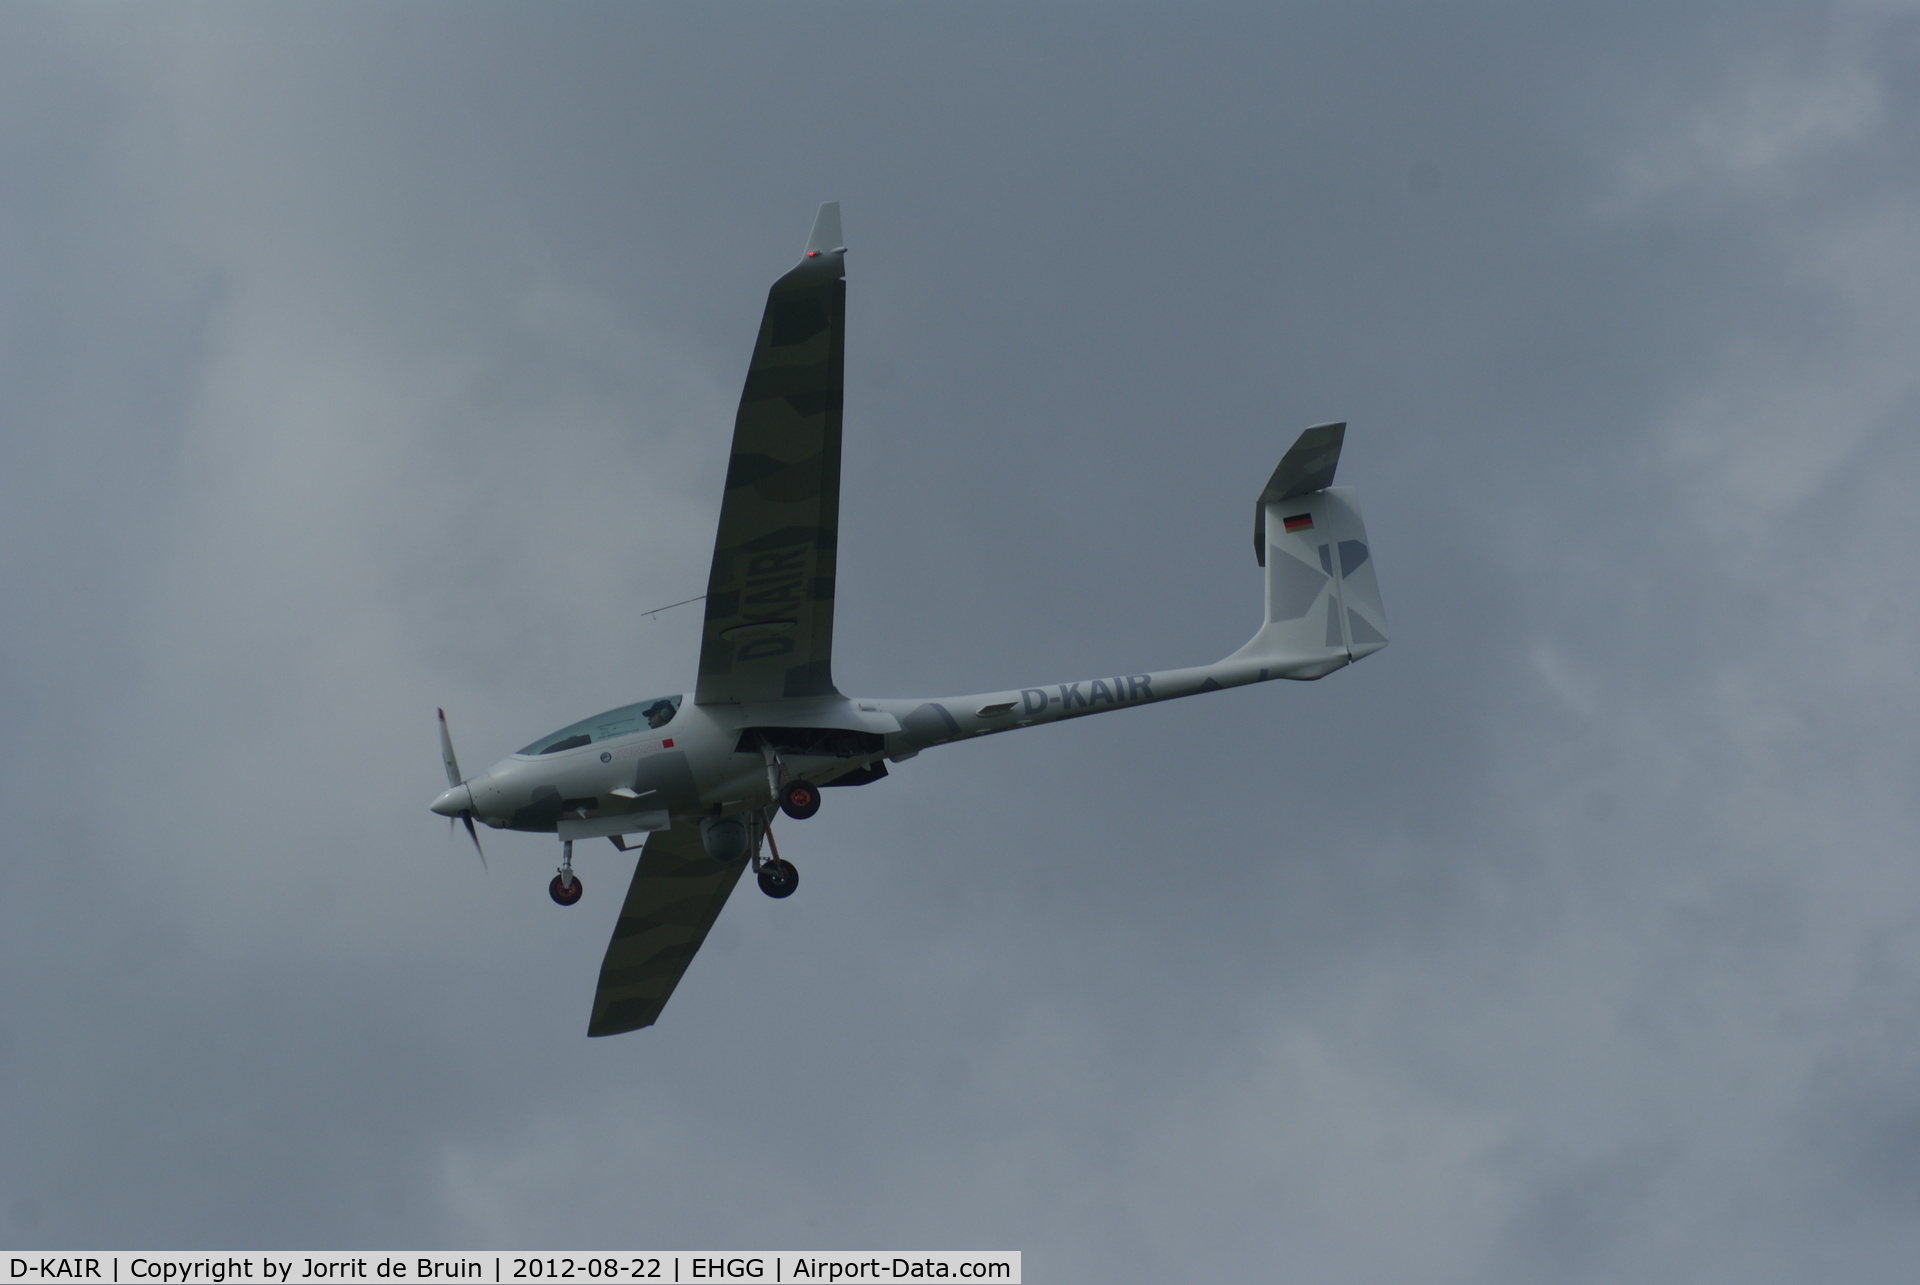 D-KAIR, Stemme S-15 C/N Not found D-KAIR, On the final approach of runway 23 at Eelde airport.